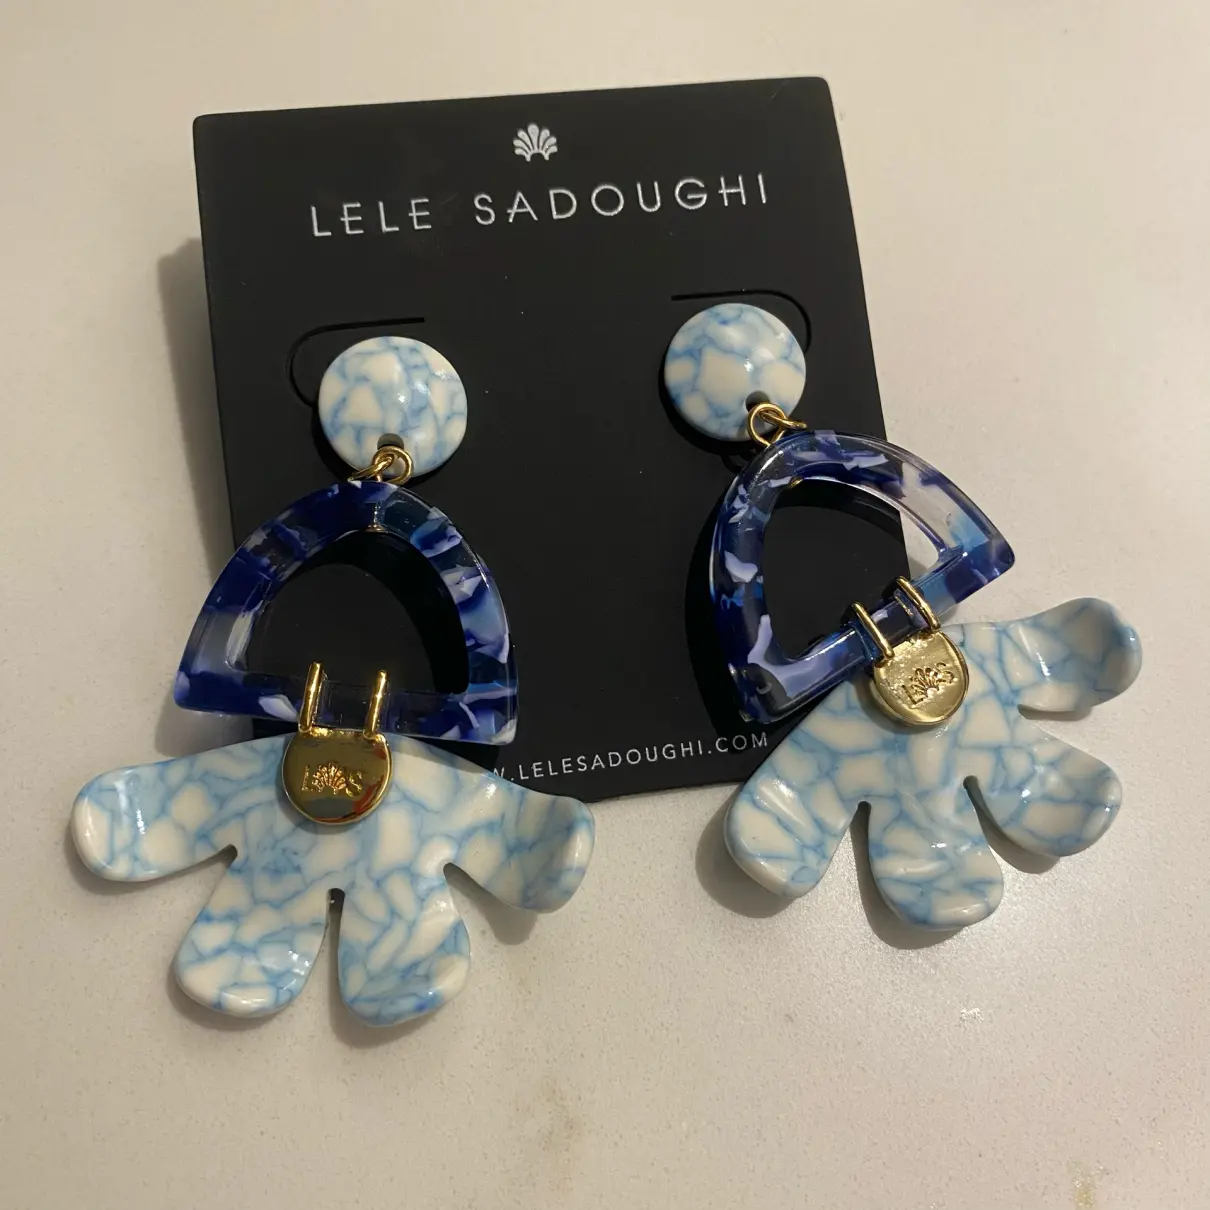 Buy Lele Sadoughi Earrings online